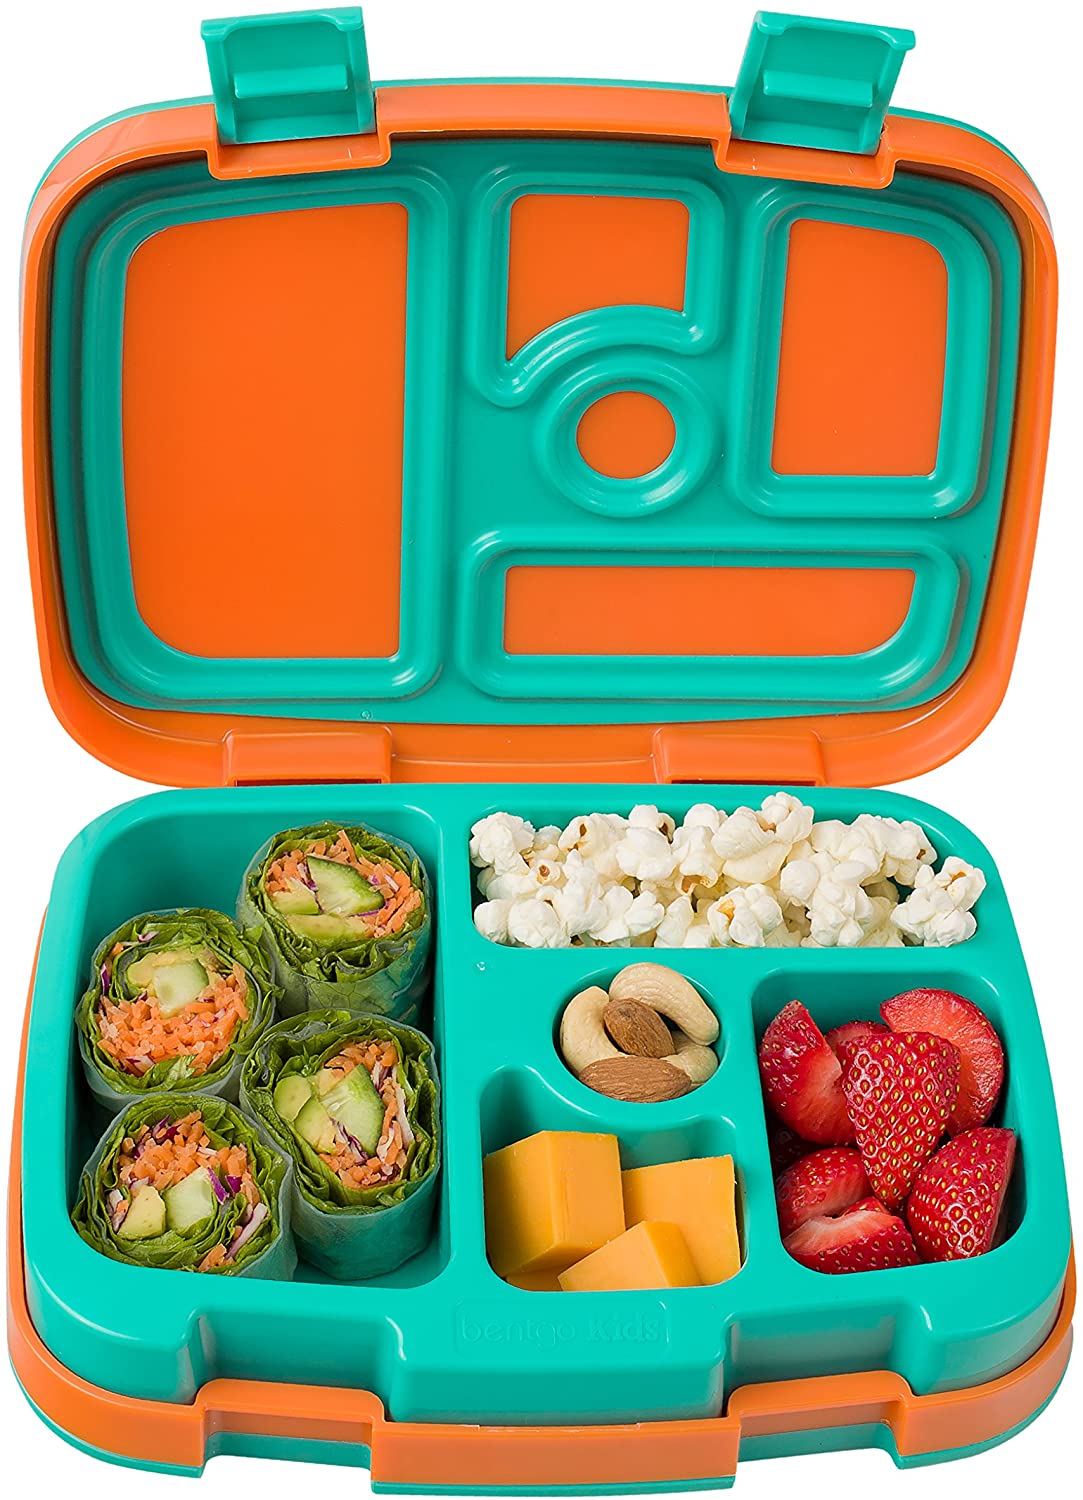 Bentgo Kids Durable & Leak Proof Shark Children's Lunch Box - Blue, 1 ct -  City Market